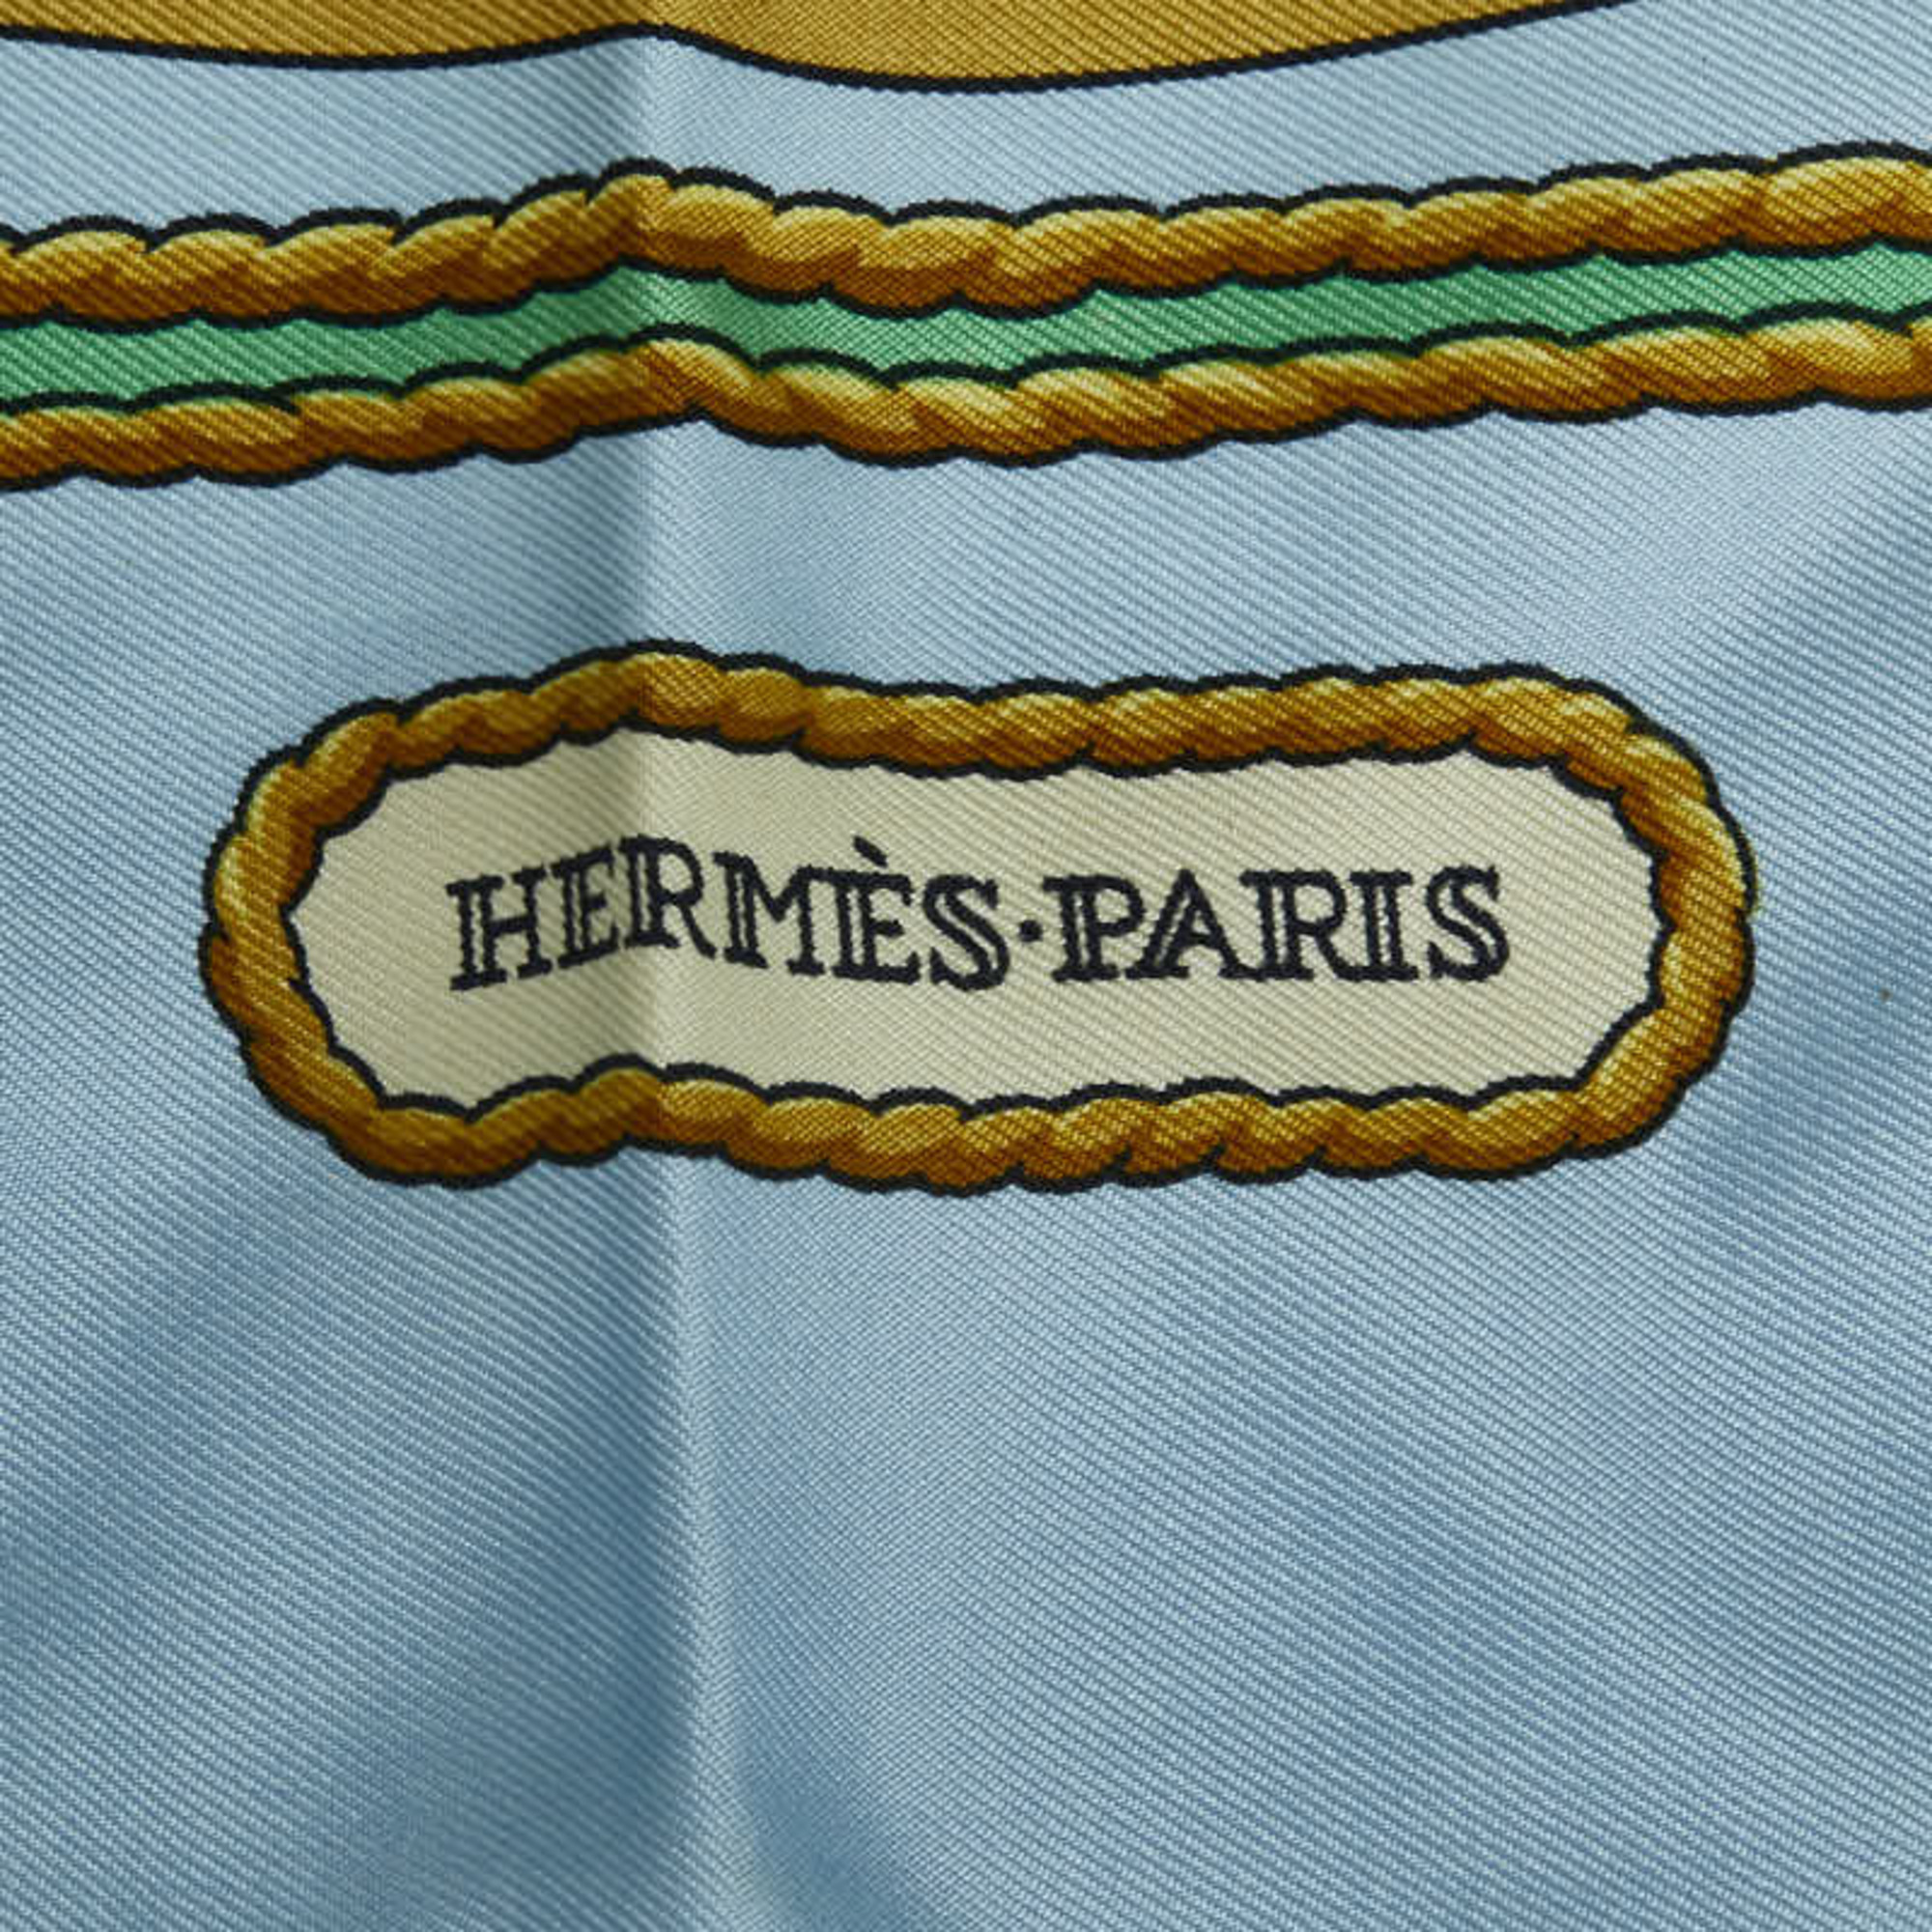 Hermes Carre 90 HOMMAGE A CHARLES GARNIER Tribute to Charles Garnier Scarf Muffler Sky Blue Gold Multicolor Silk Women's HERMES